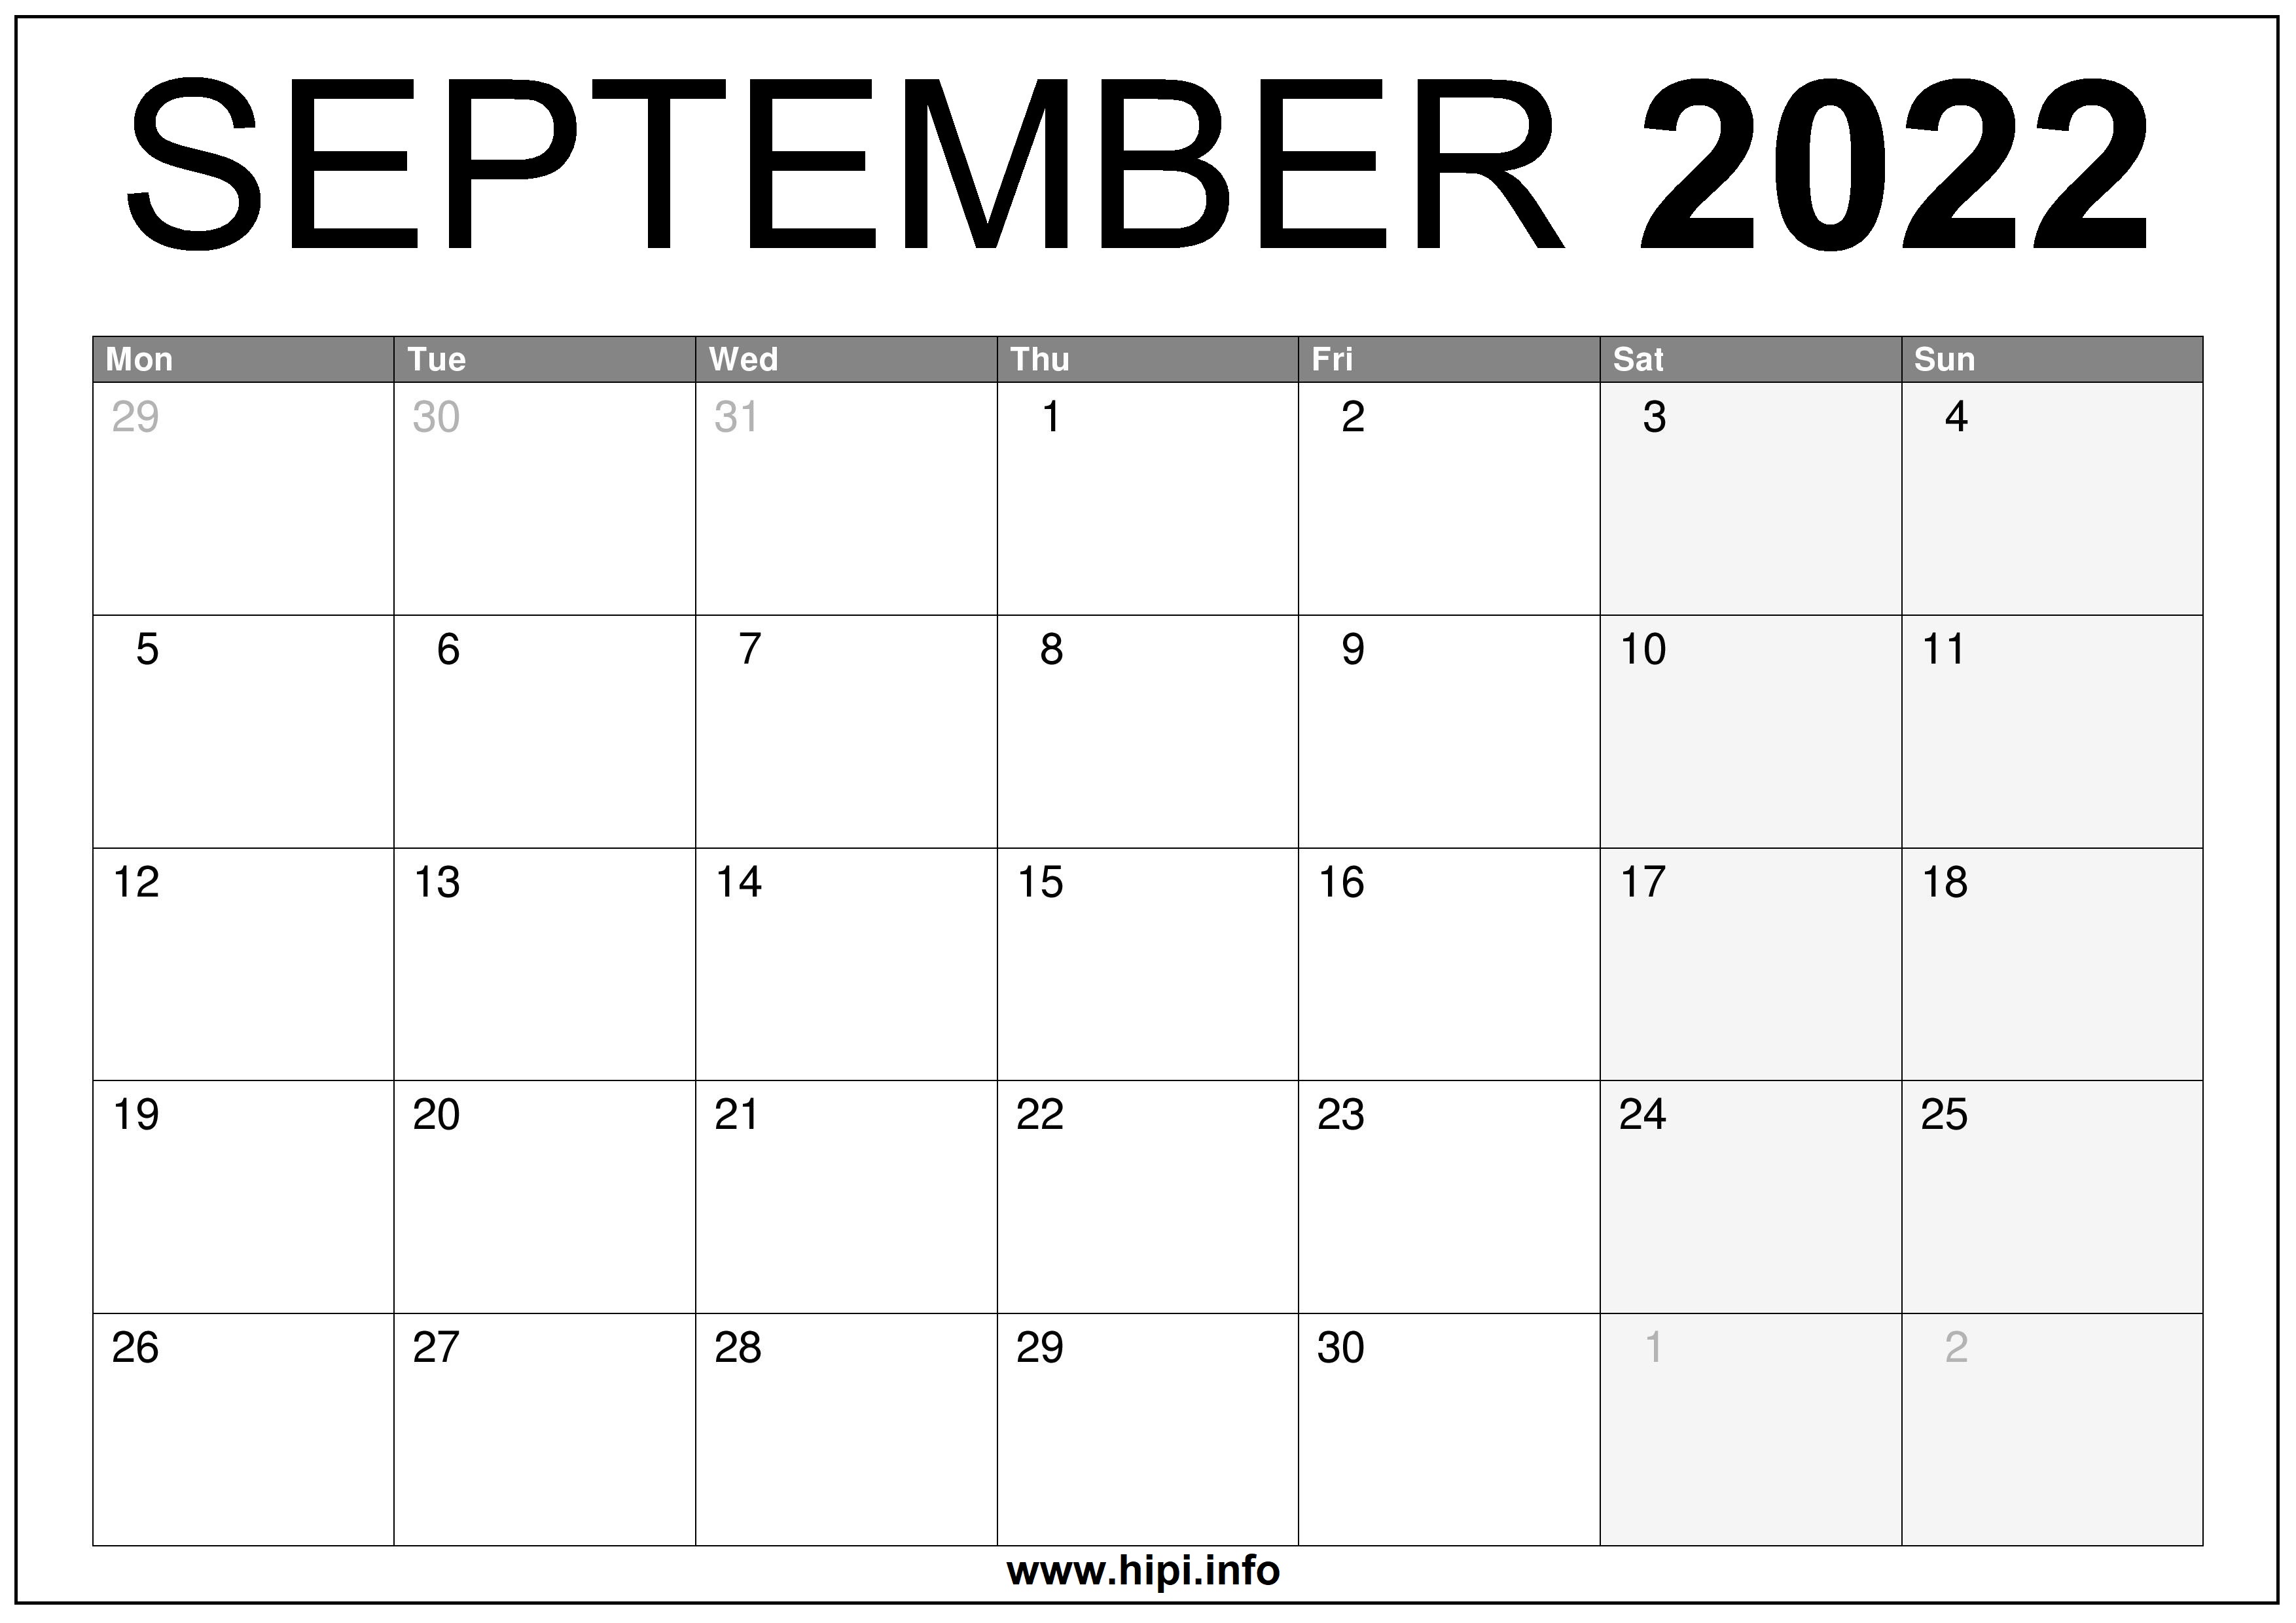 Download September 2022 Calendar September 2022 Uk Calendar Printable Free - Hipi.info | Calendars Printable  Free